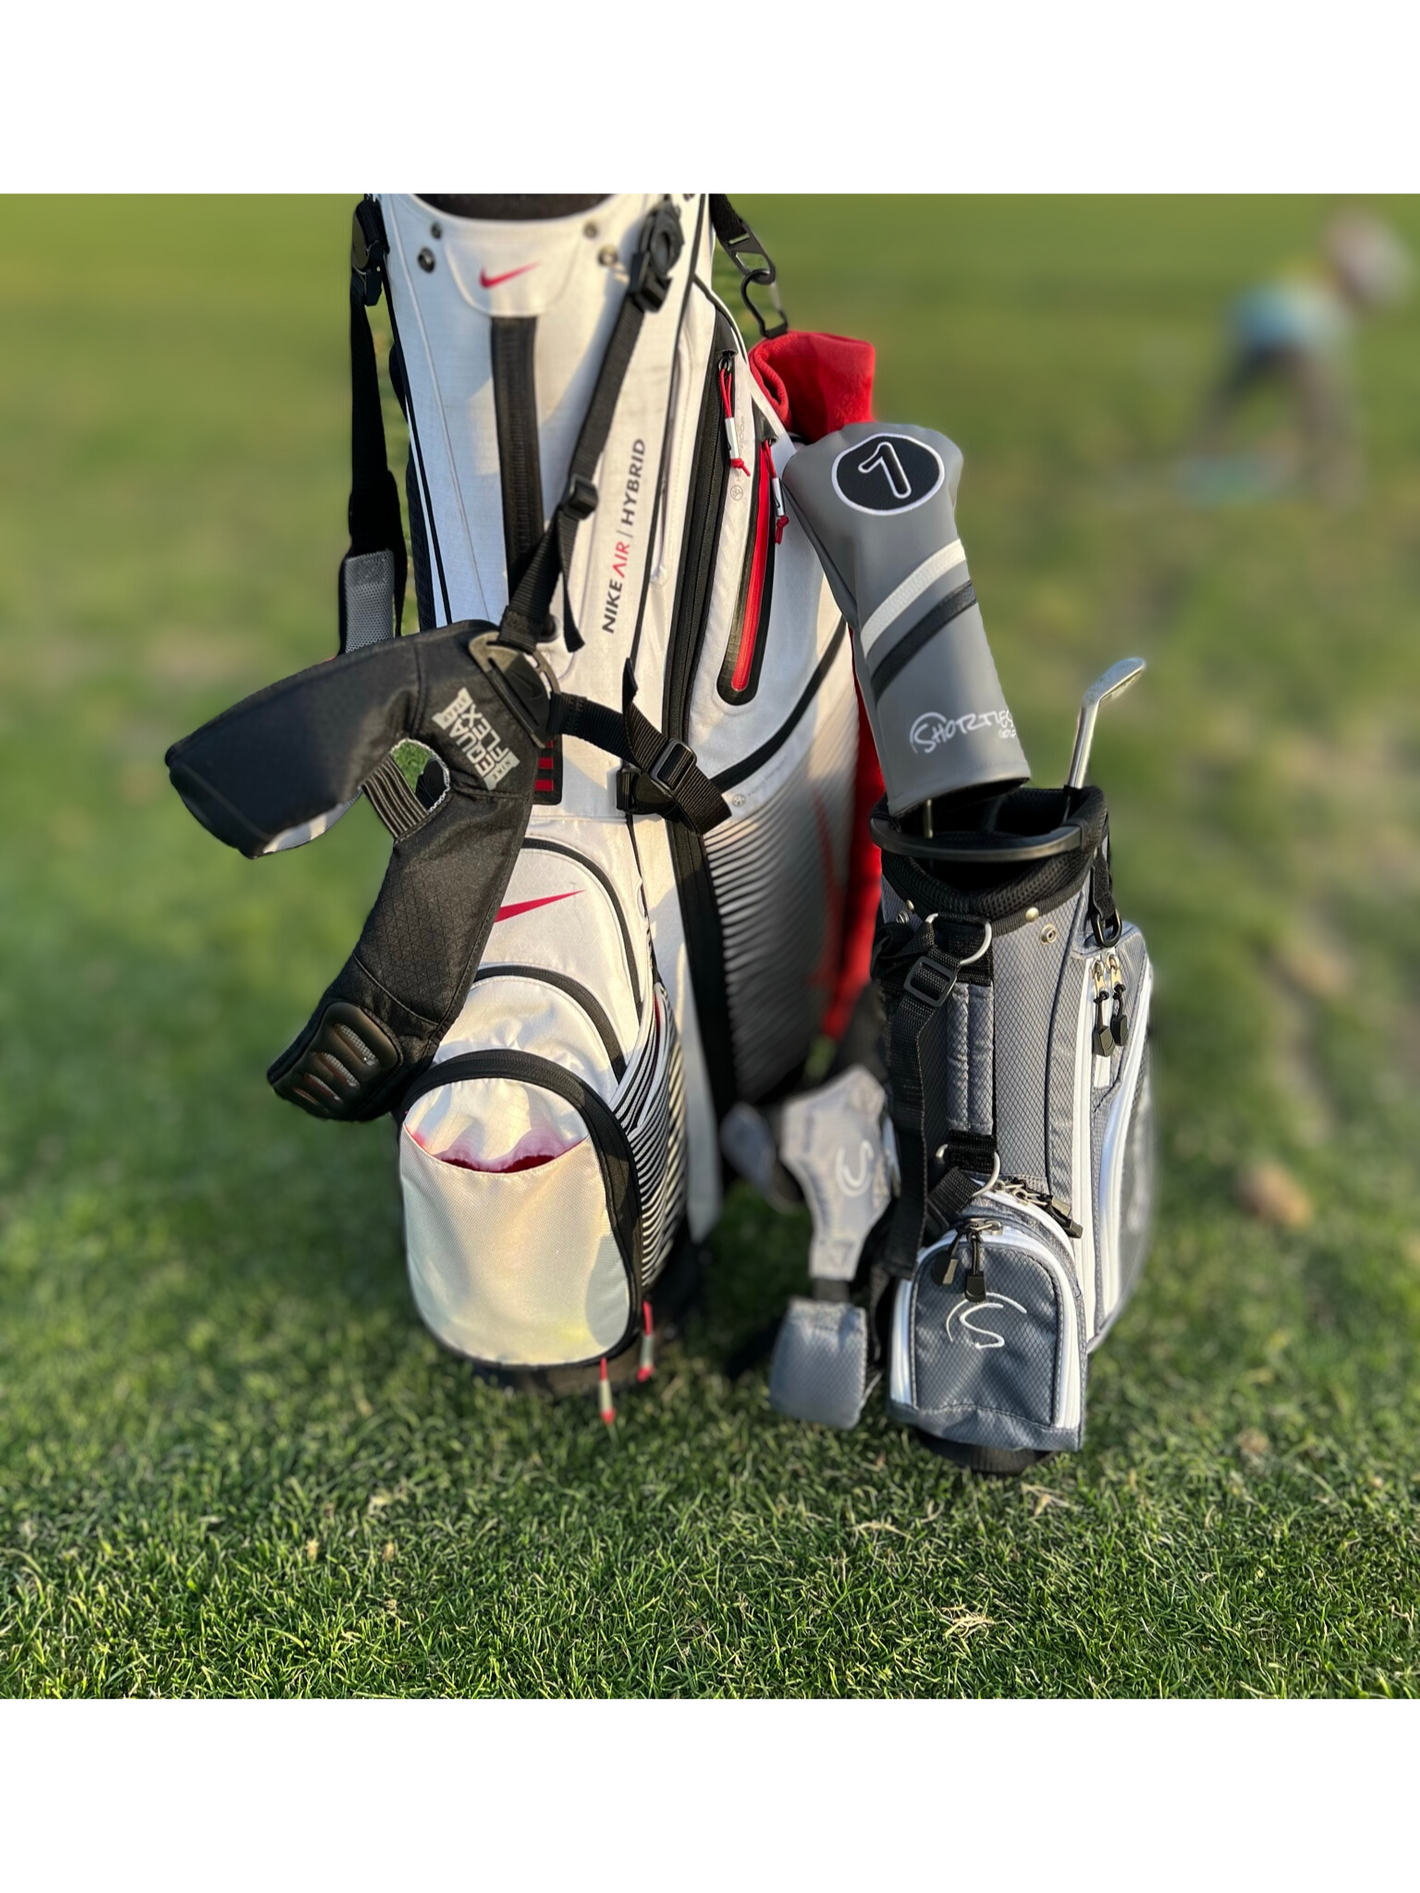 Kids Golf Bag, Toddler Golf Bag